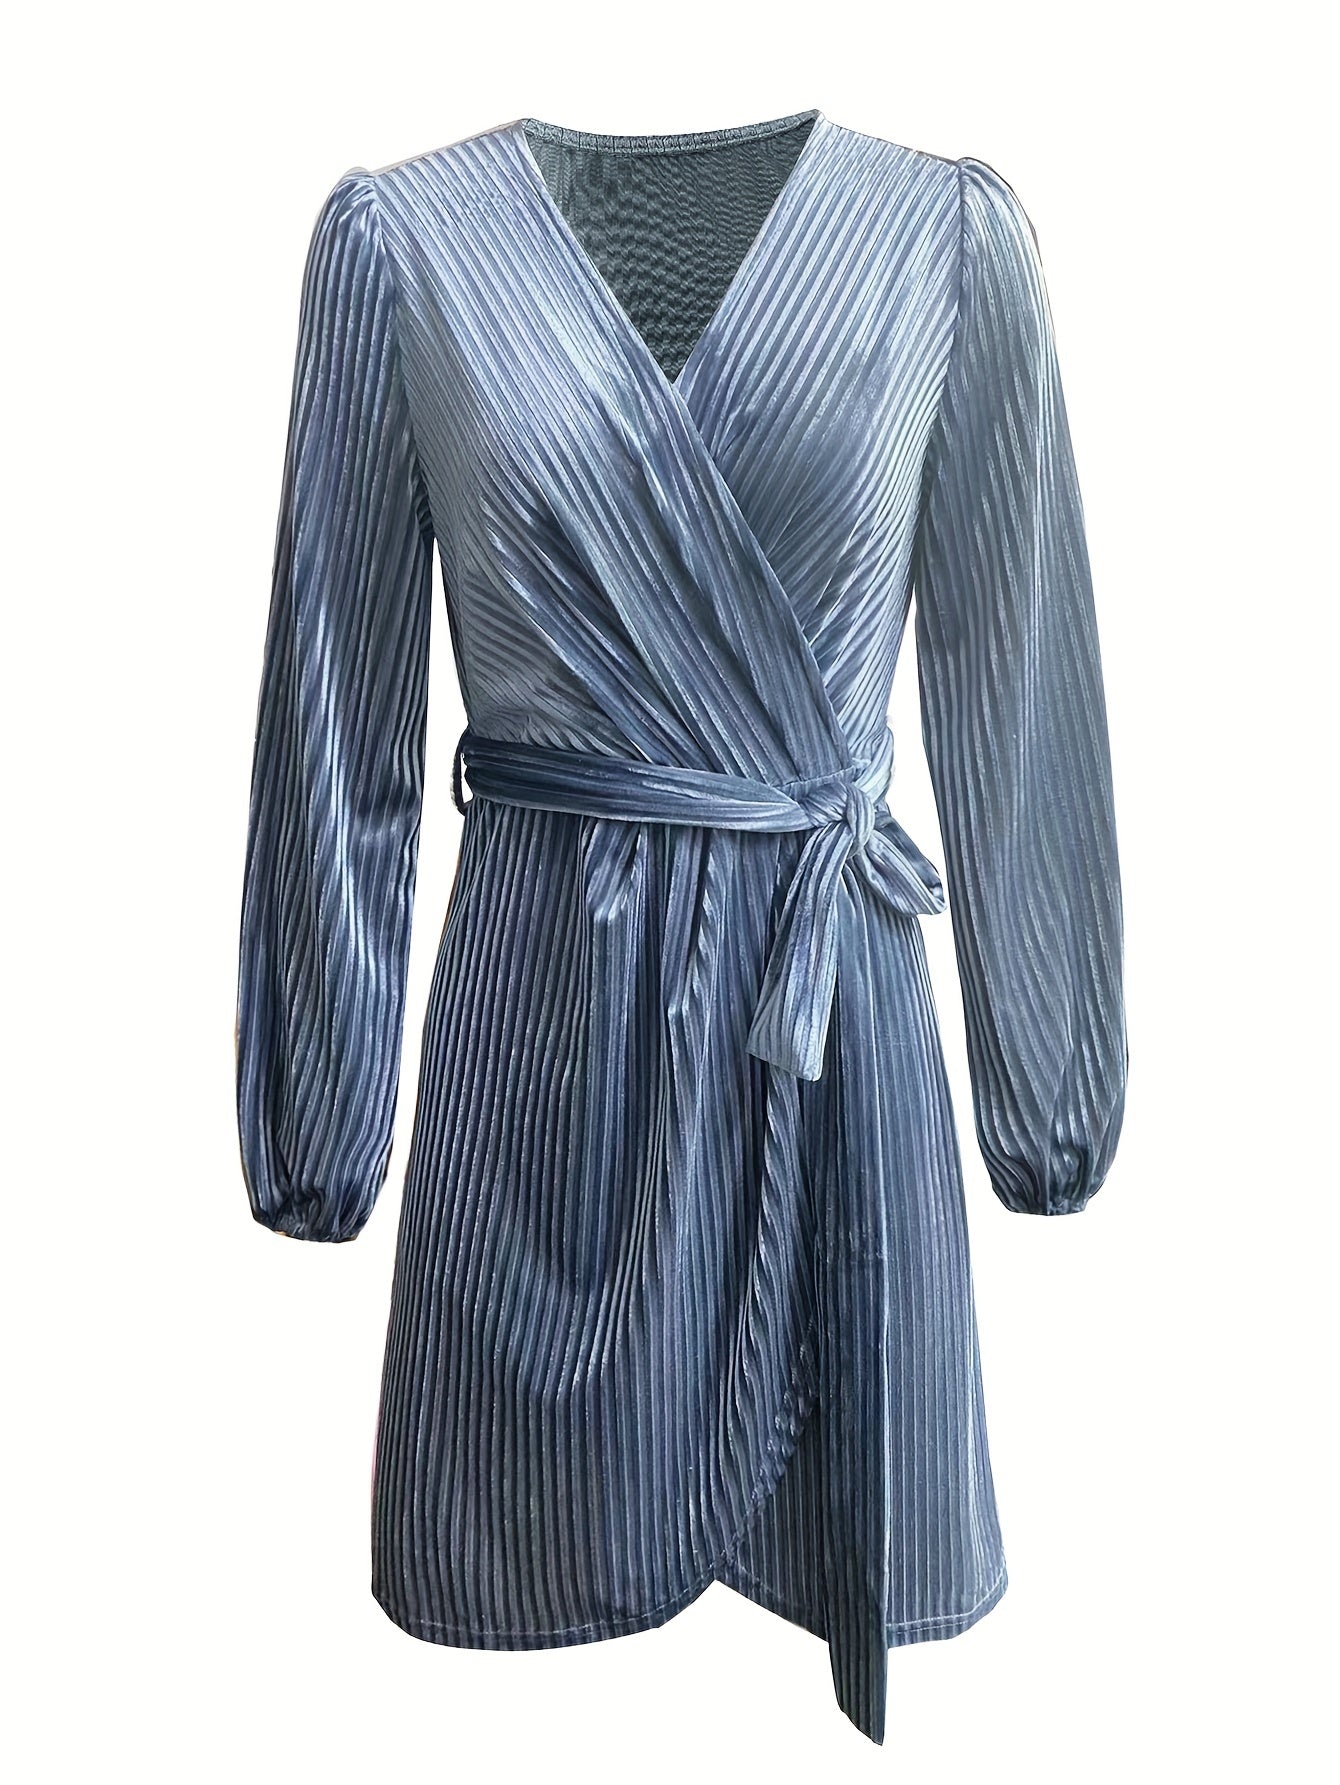 vlovelaw  Solid Ribbed Surplice Neck Dress, Elegant Long Sleeve Belted Dress, Women's Clothing